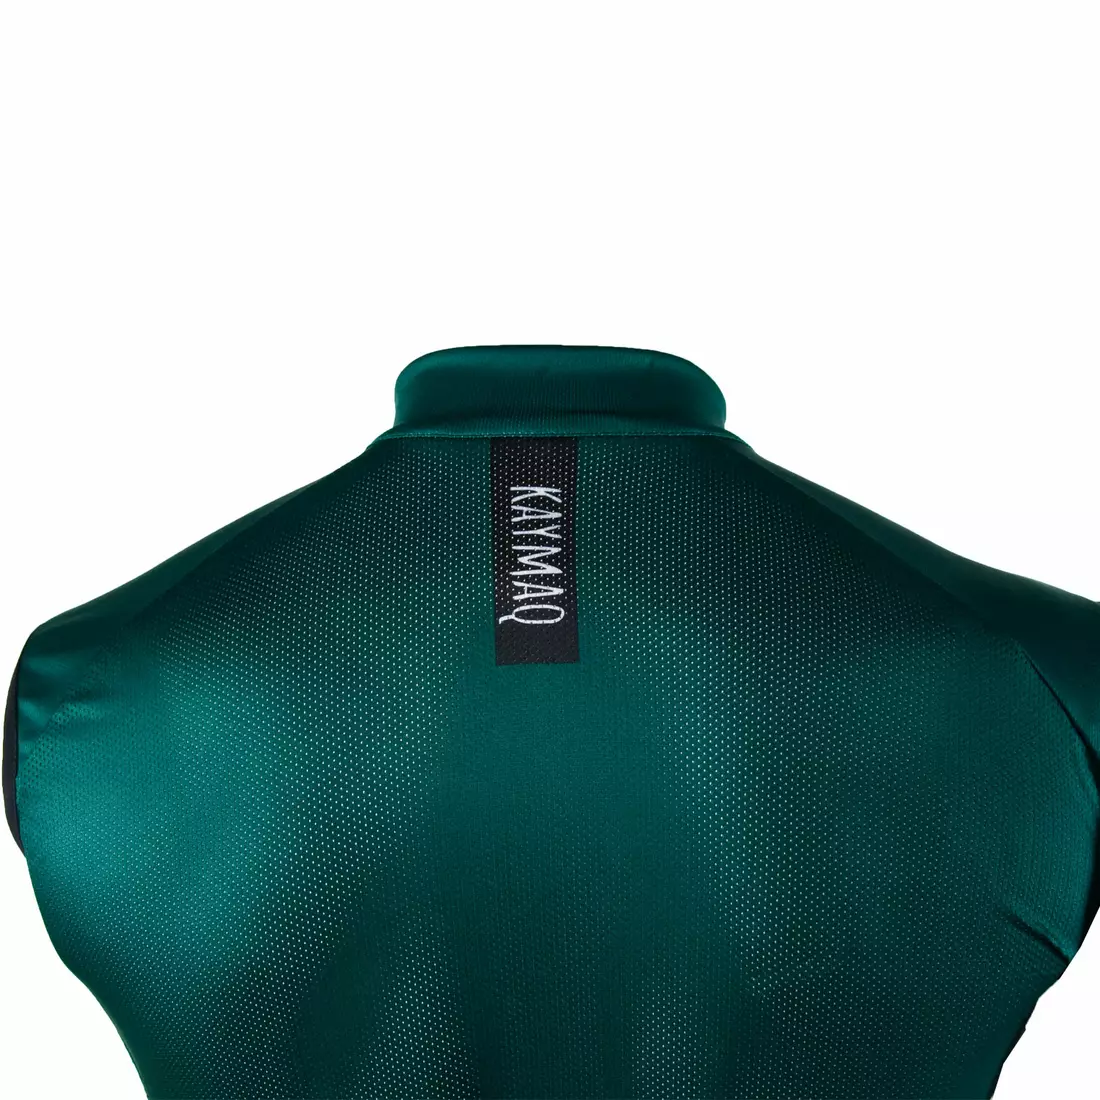 KAYMAQ SLEEVELESS men's T-shirt 01.217, green